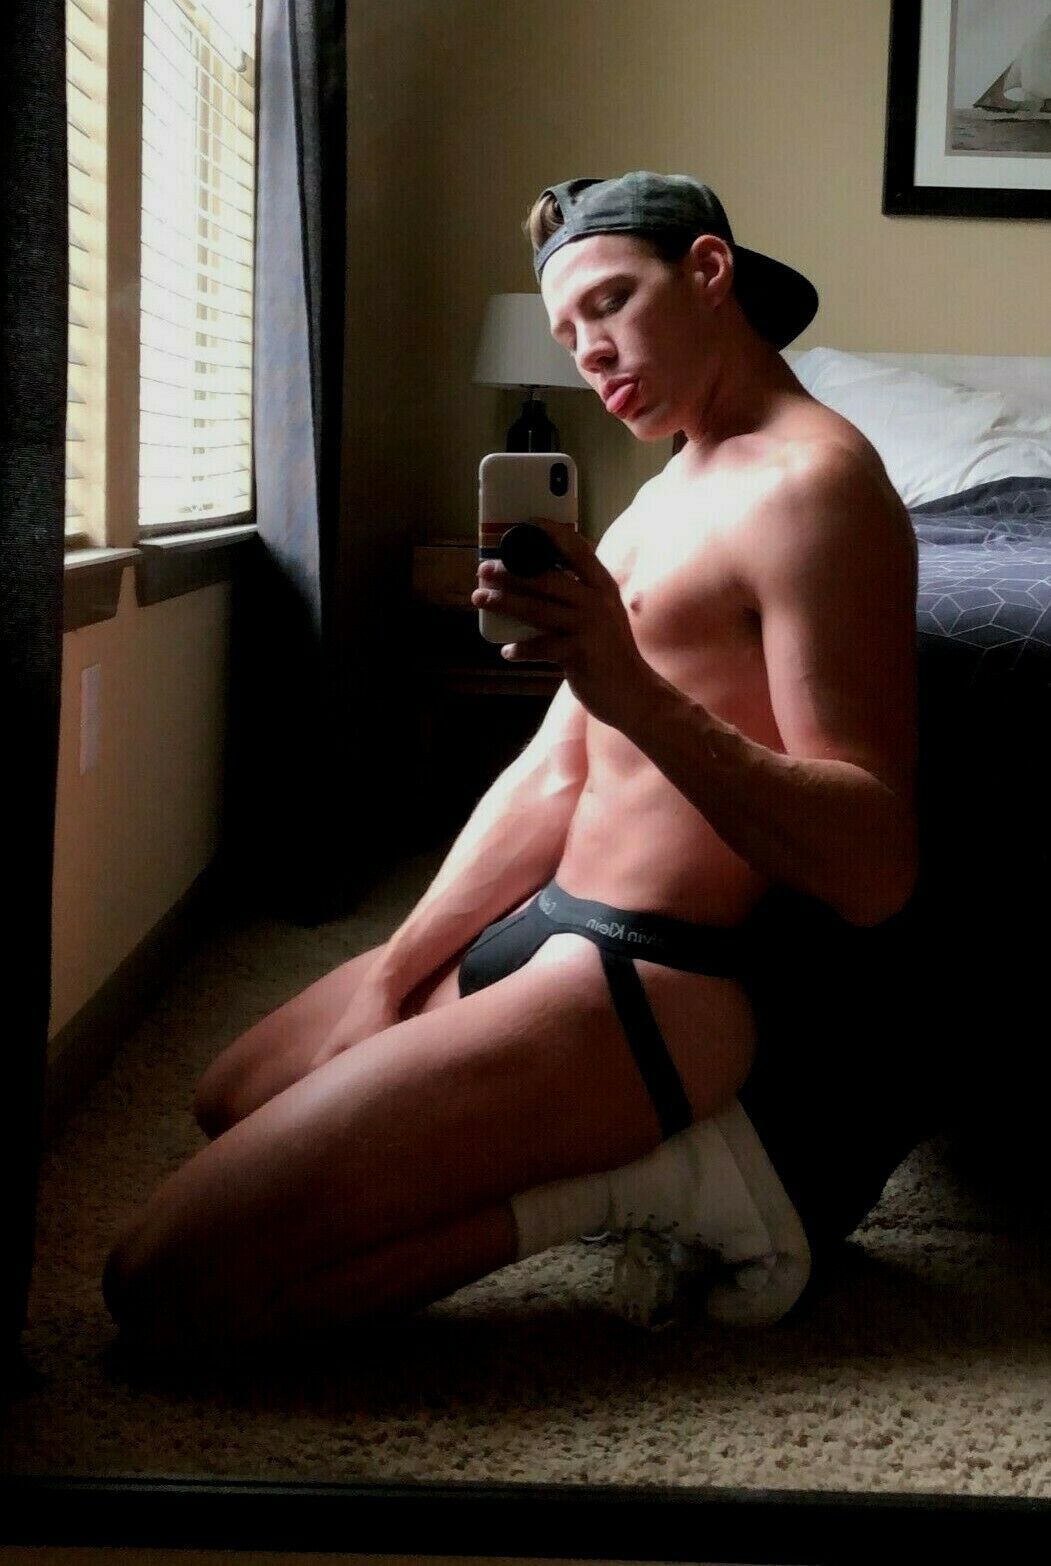 Shirtless Male Jock Strap Hunk Gay Interest  Dude PHOTO 4X6 B100